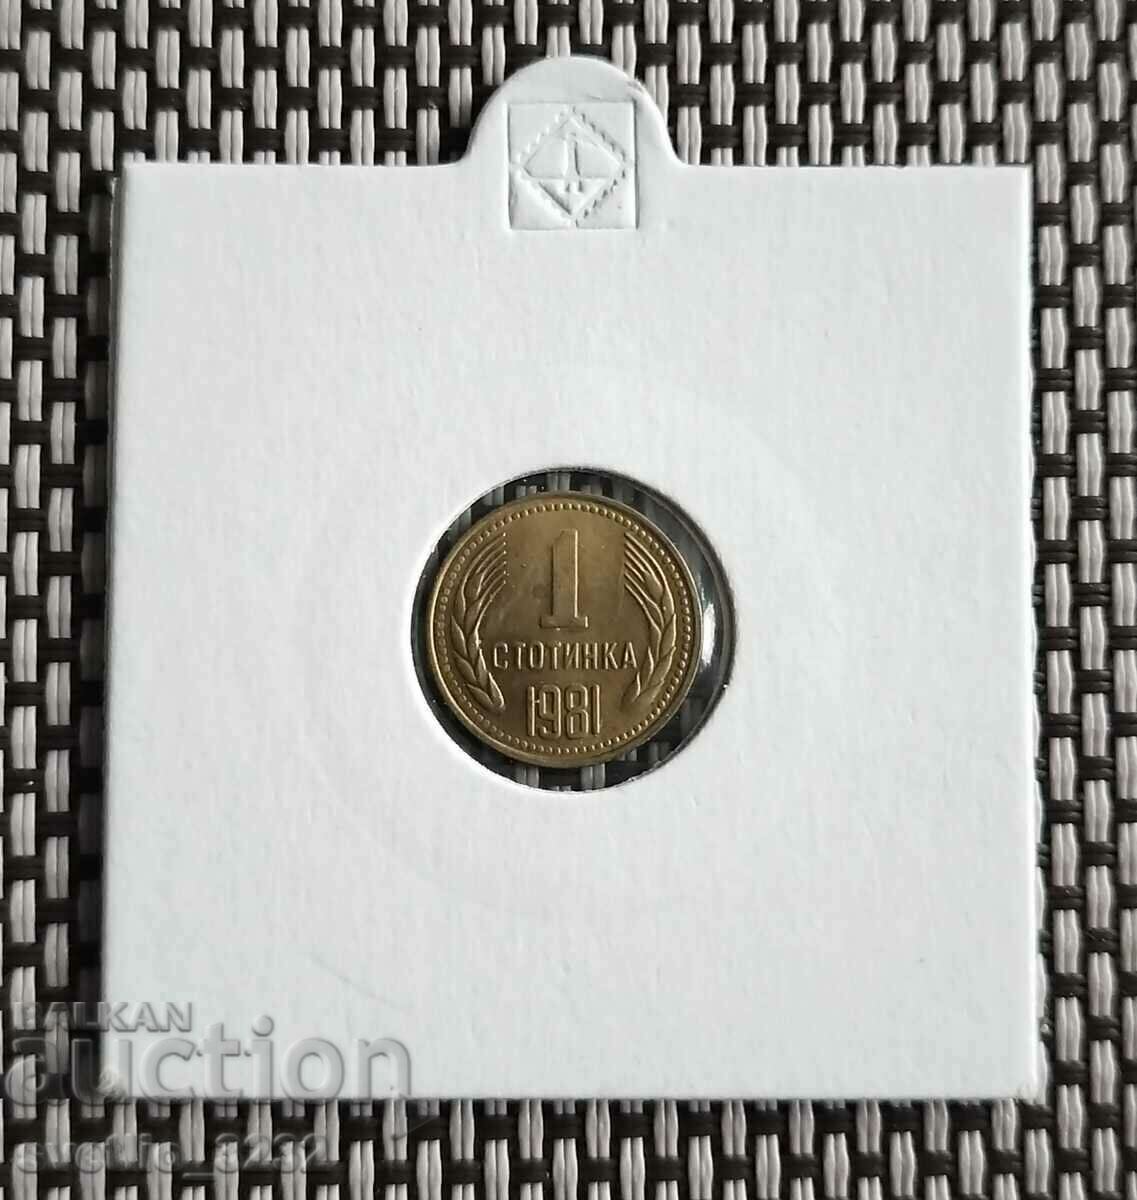 1 penny 1981